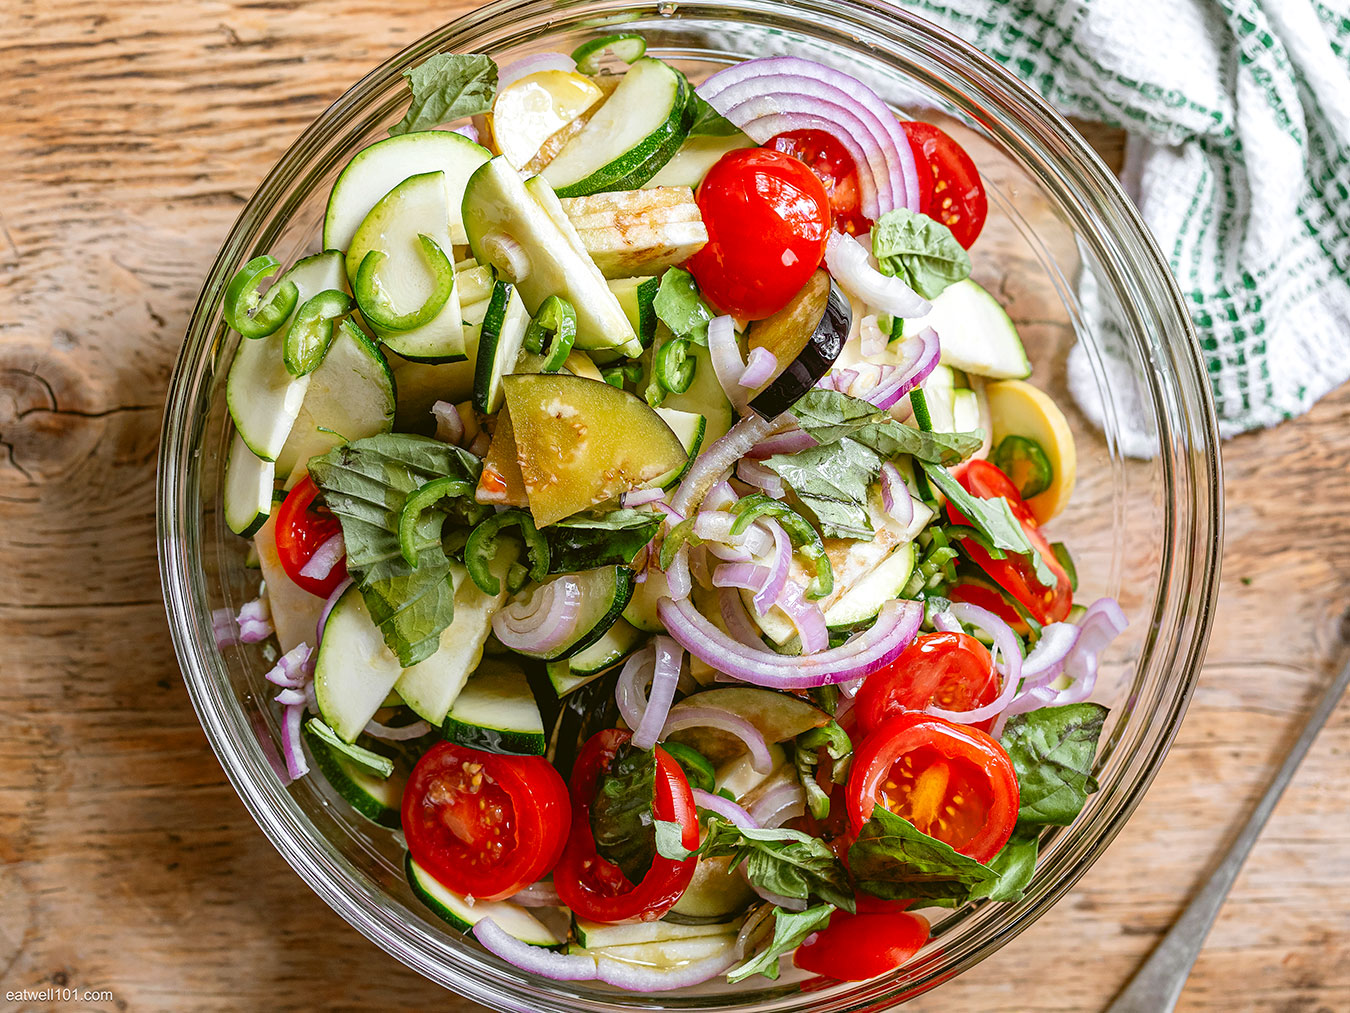 seasoned vegetables in a salad bowl